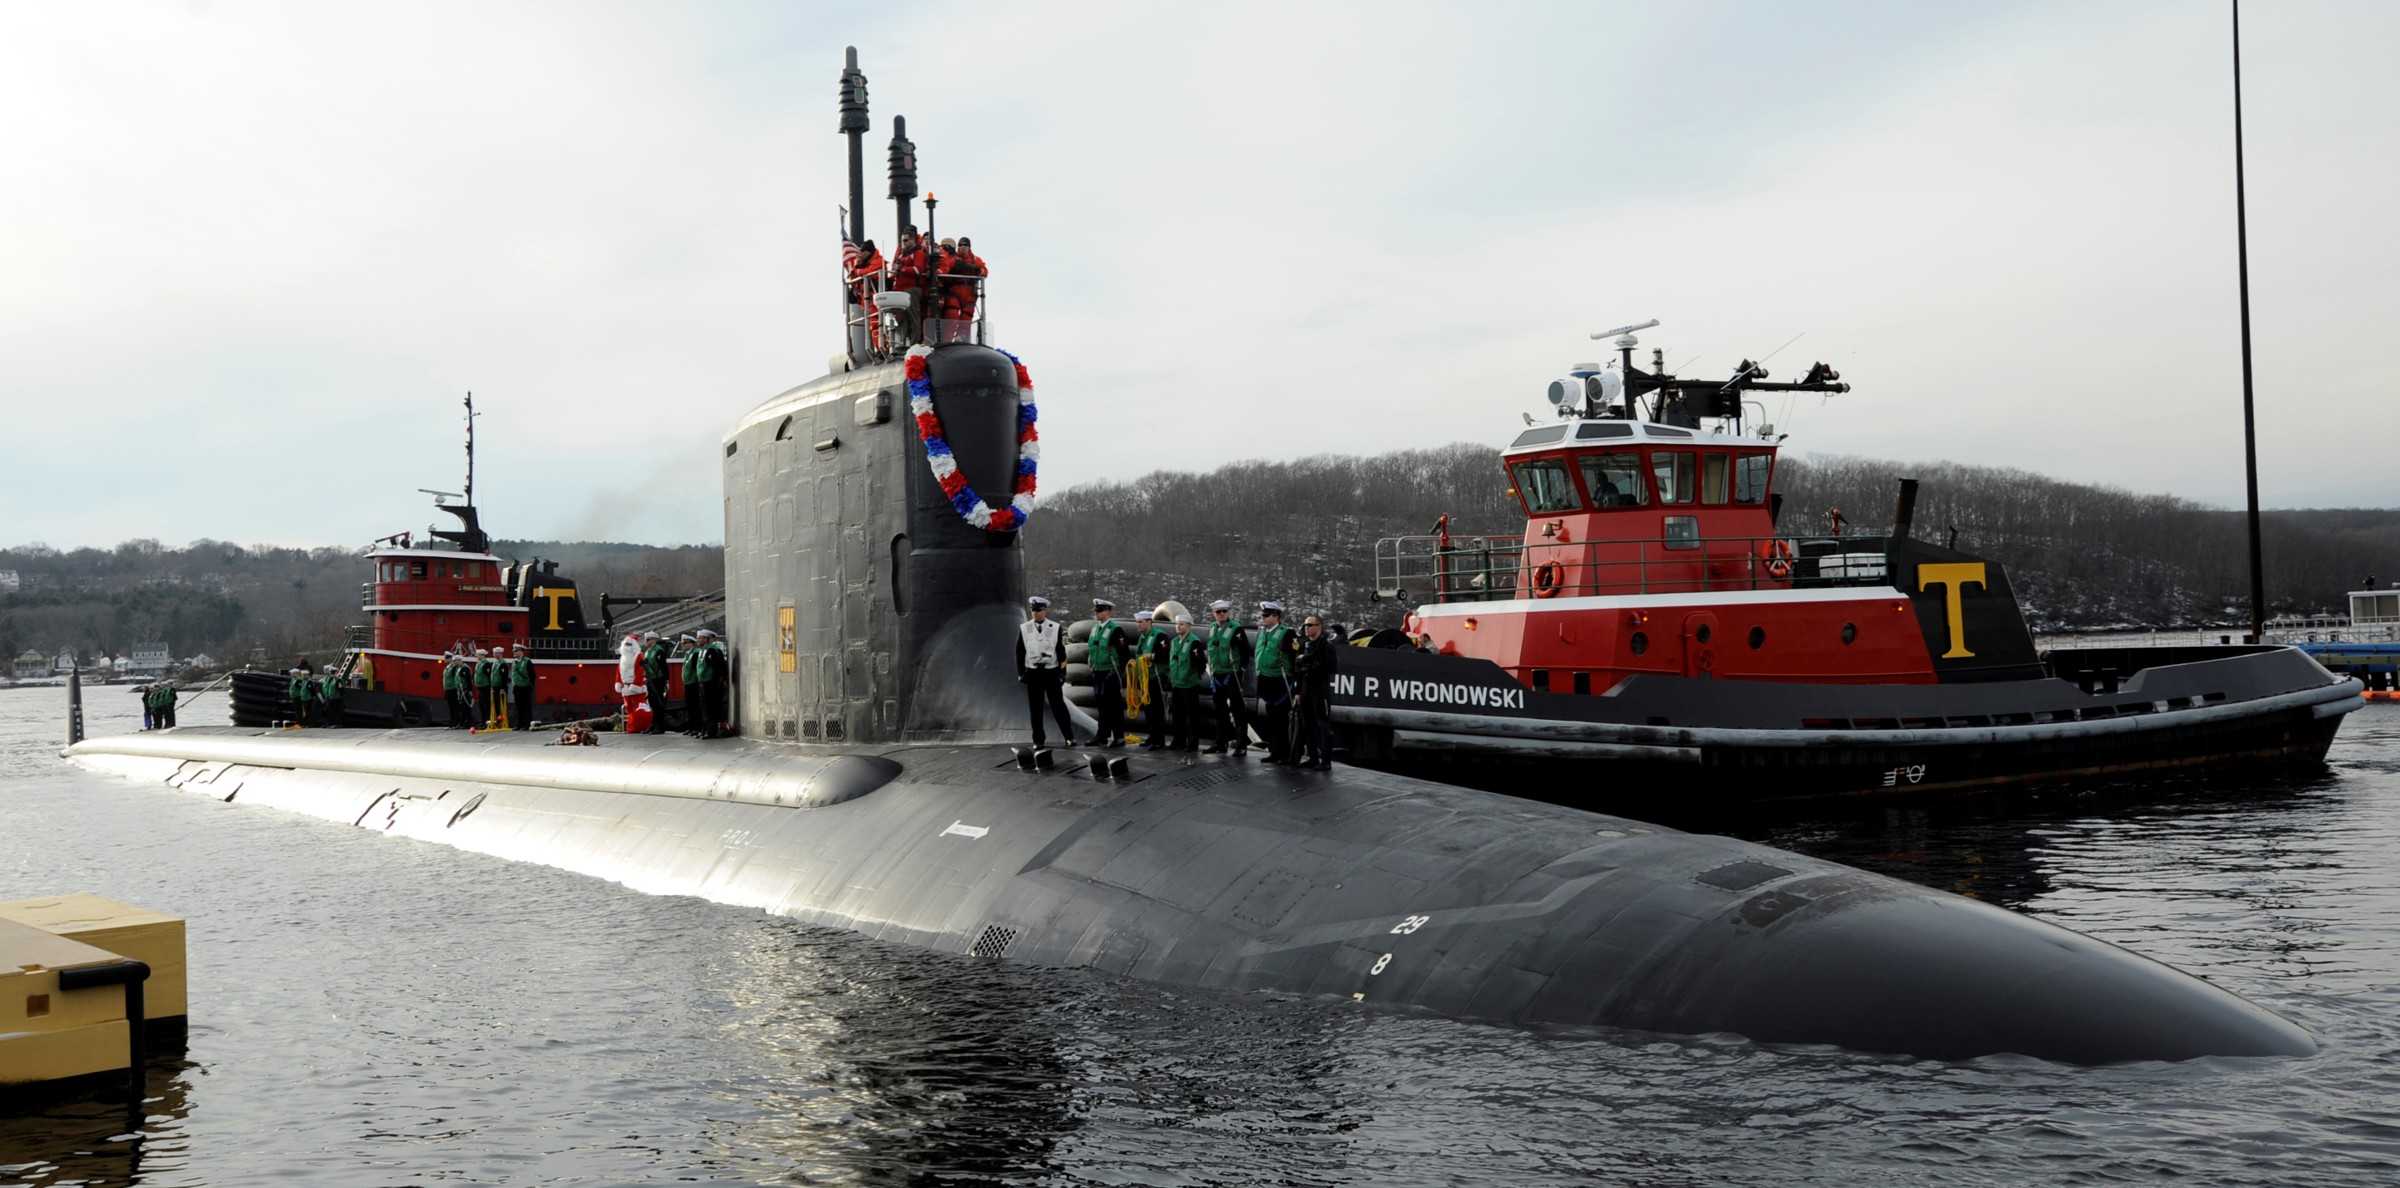 ssn-780 uss missouri virginia class attack submarine us navy 04 groton